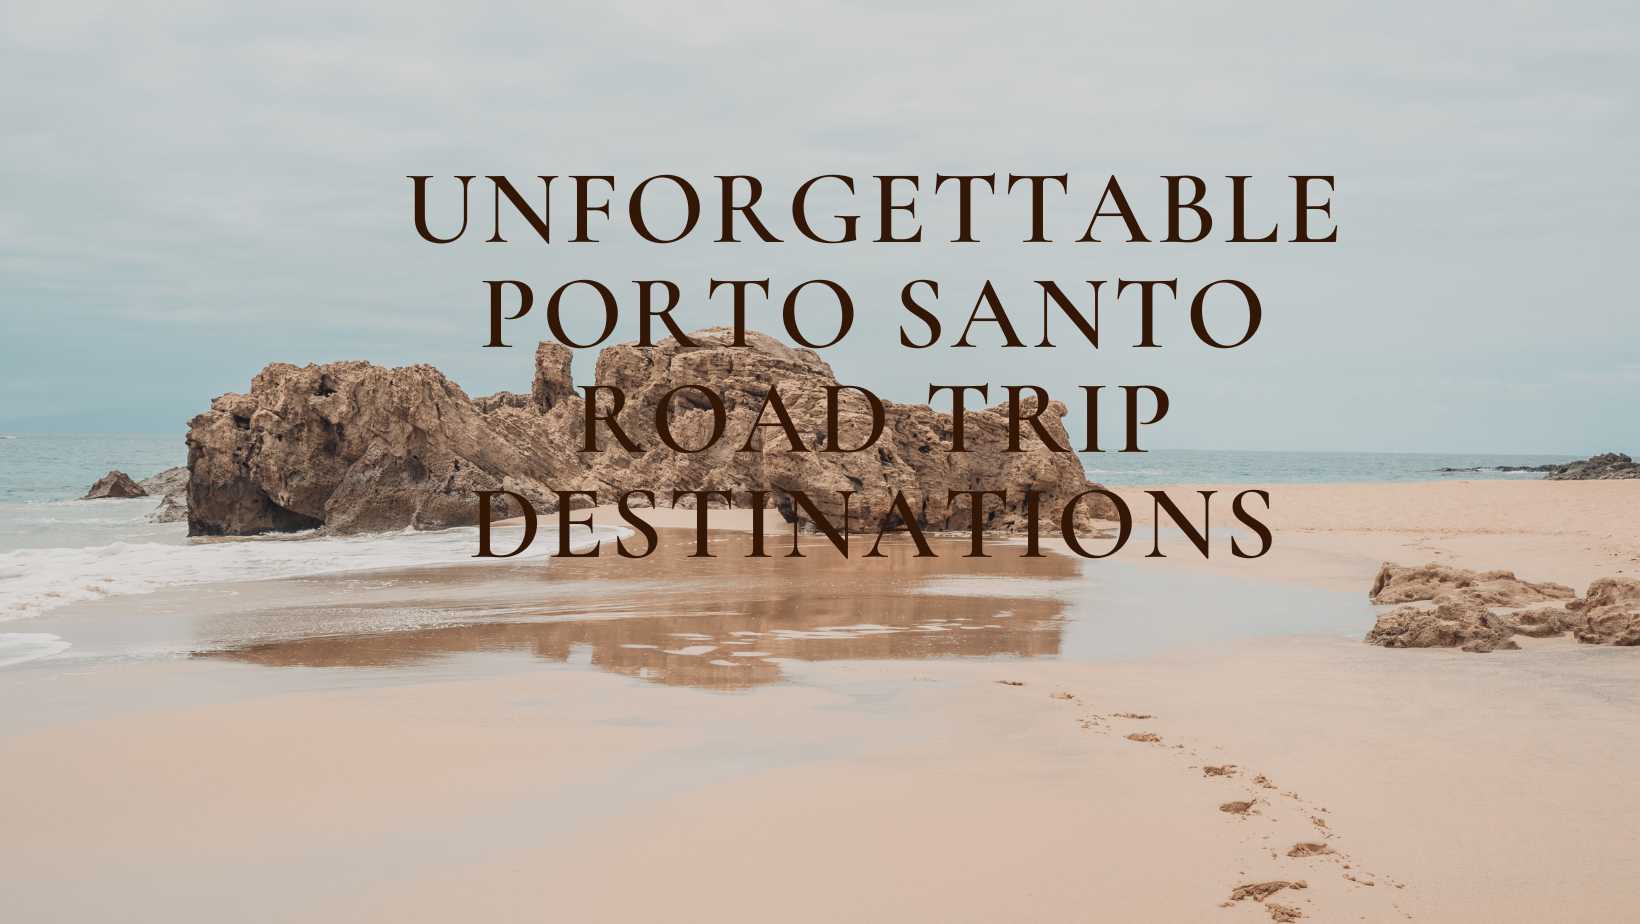 Porto Santo road trip destinations